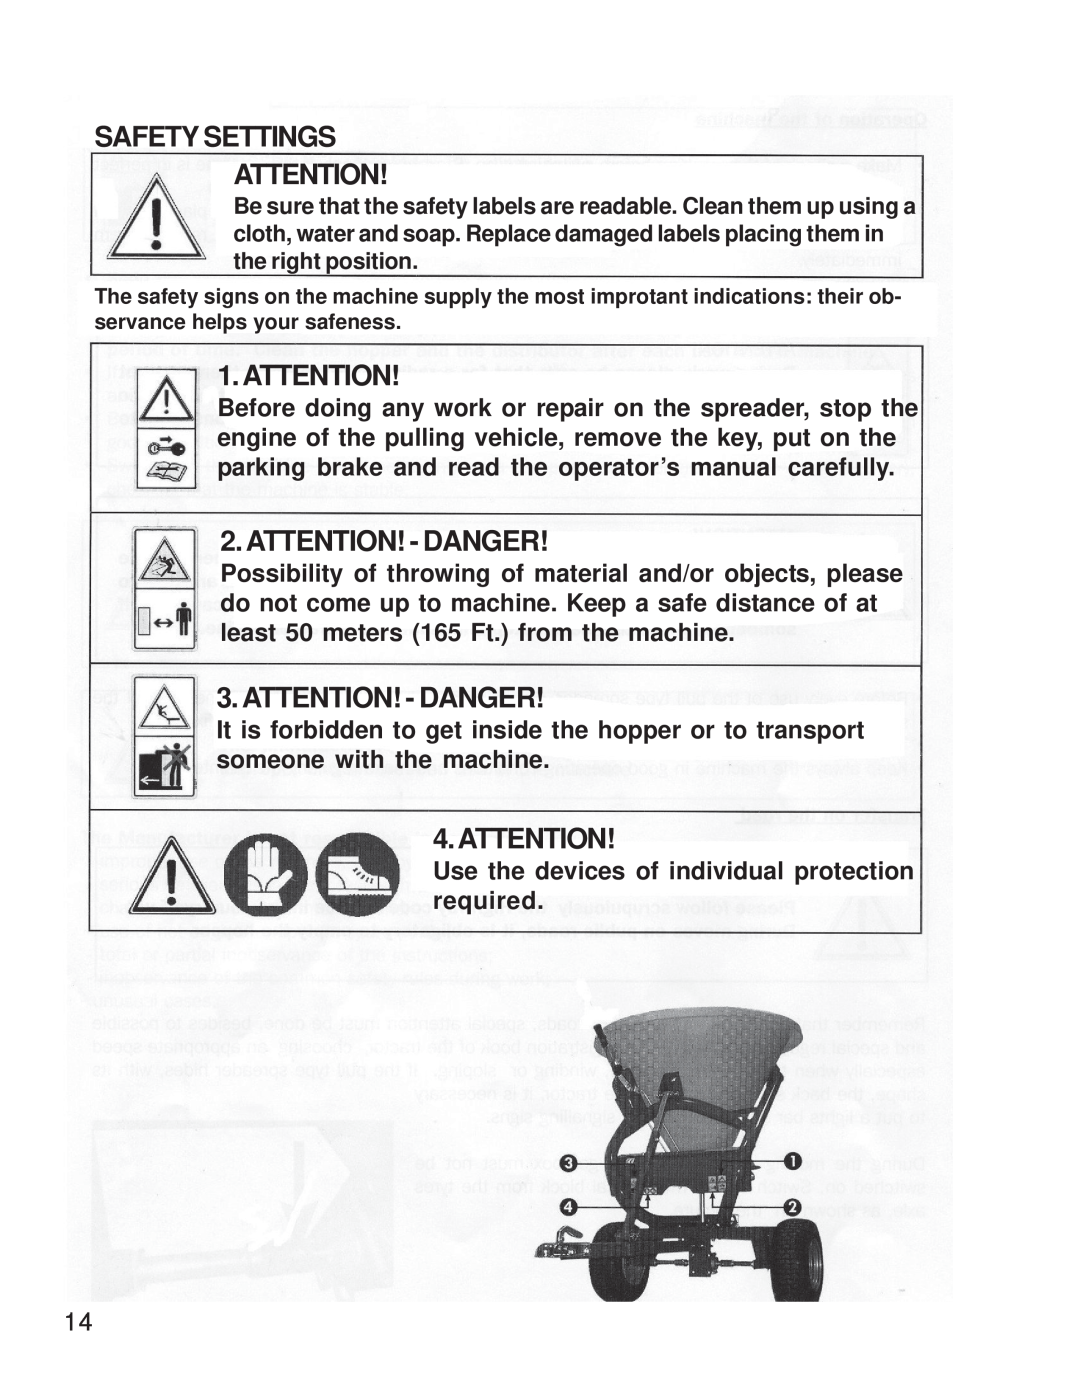 King Kutter S-ATV-180-U manual Safety Settings, Attention! - Danger 